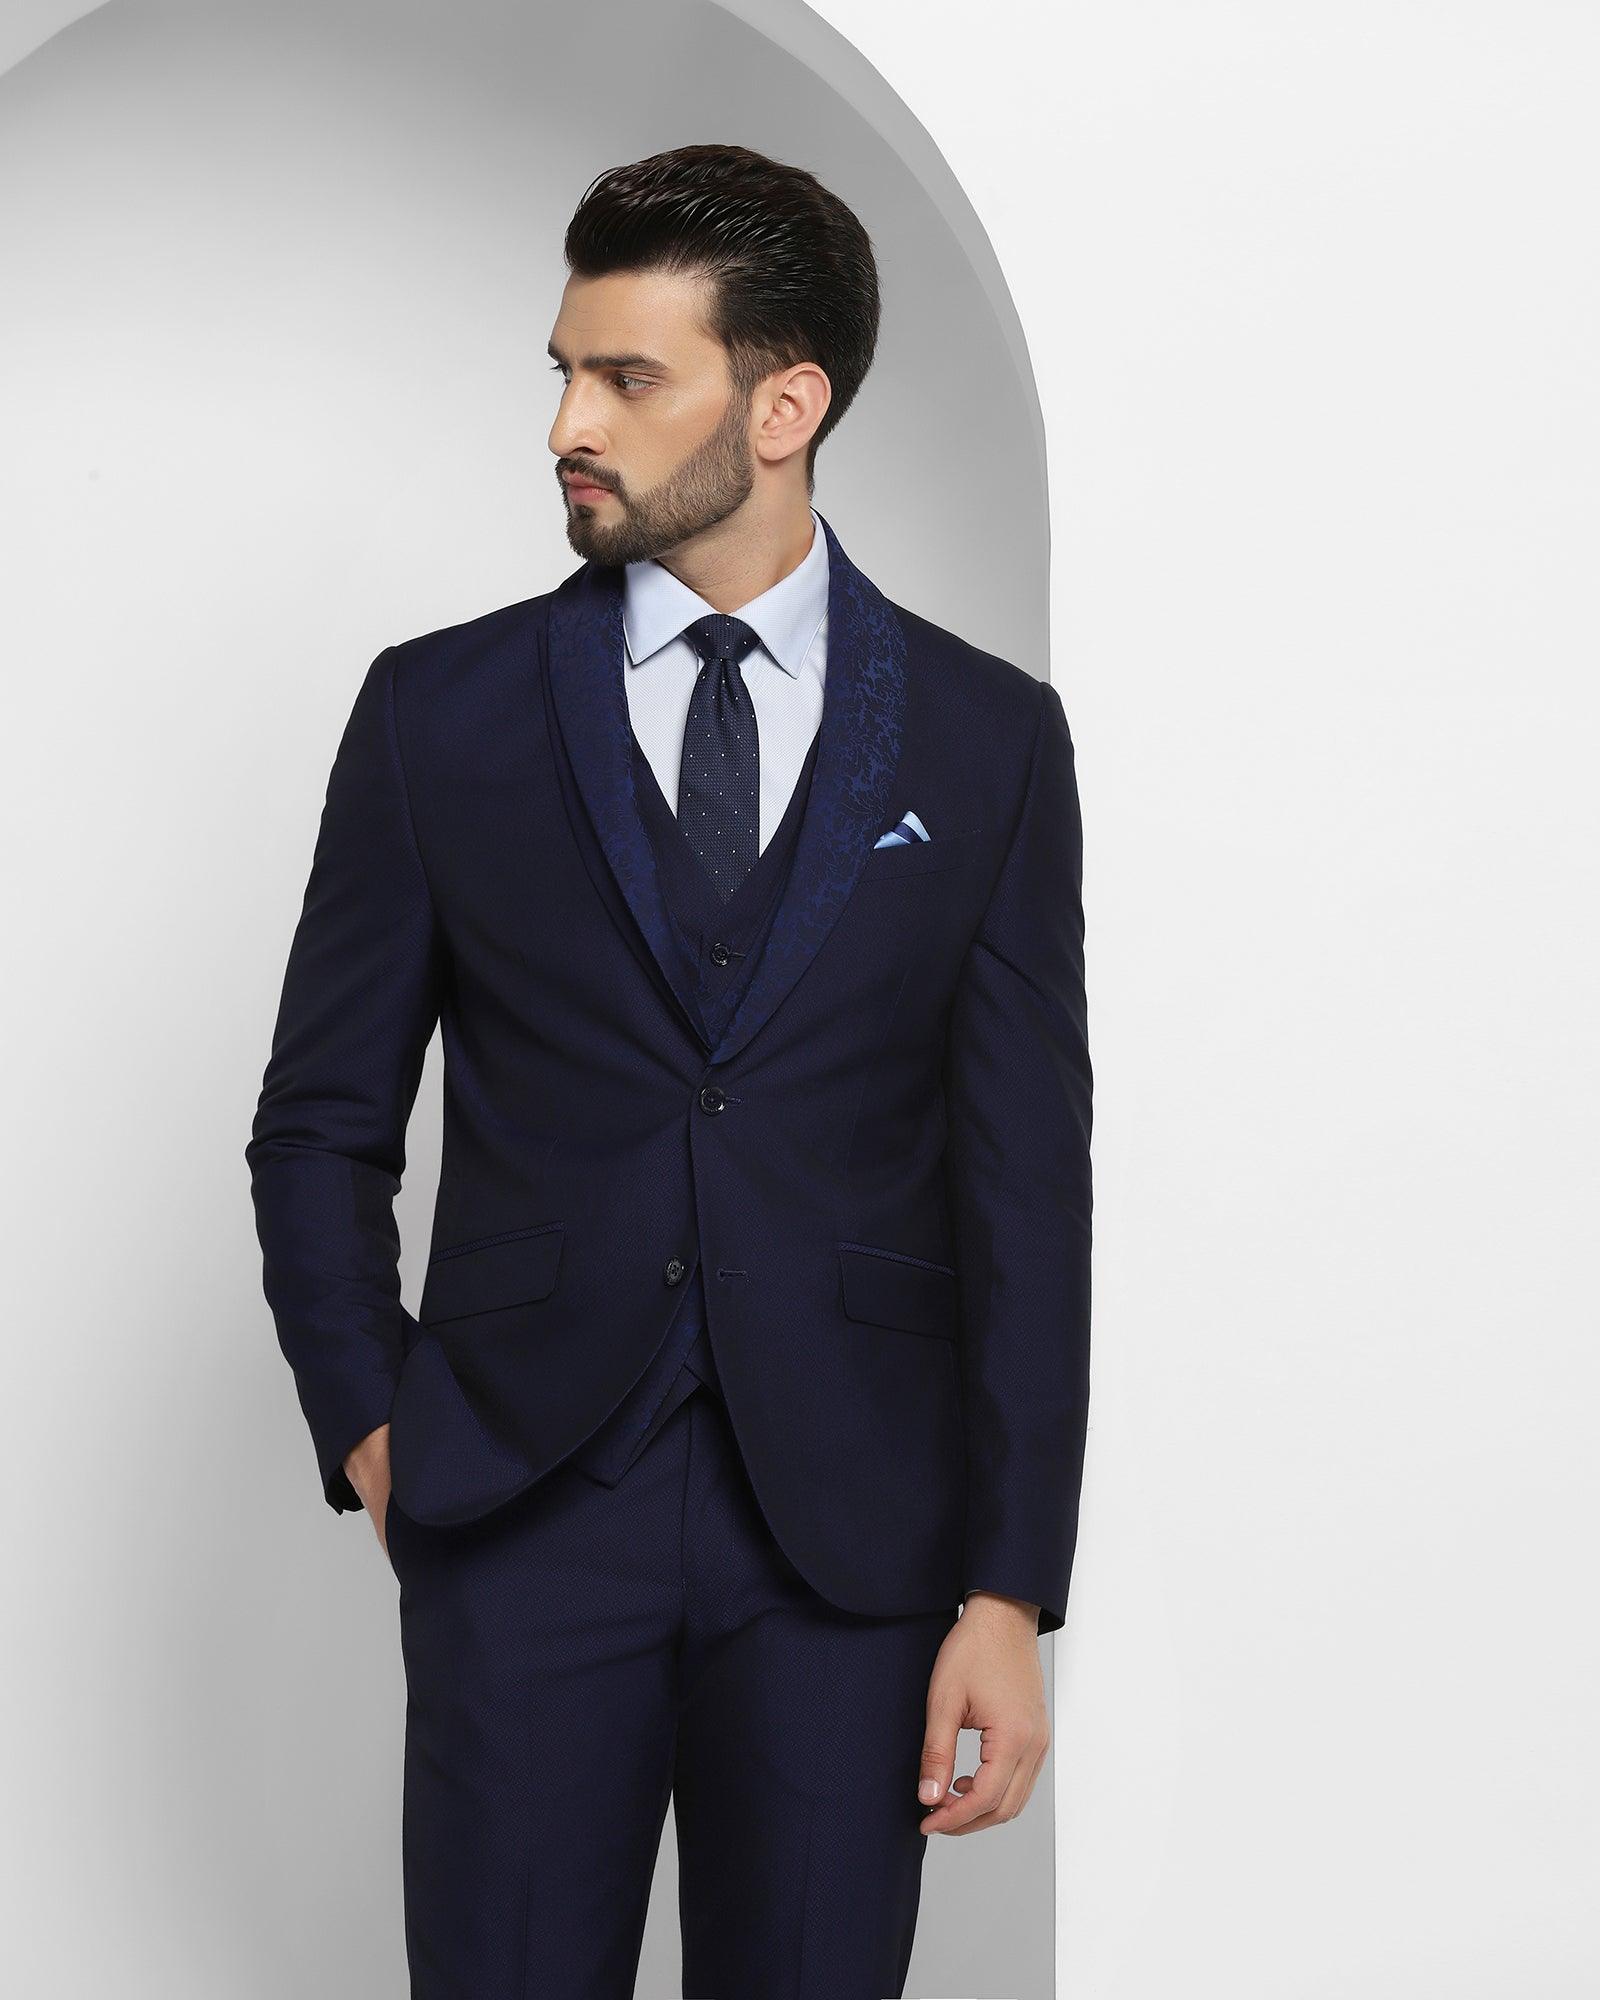 Men's Signature 3-Piece Slim Fit Suits (Slate Blue, Sea Green, Tan)